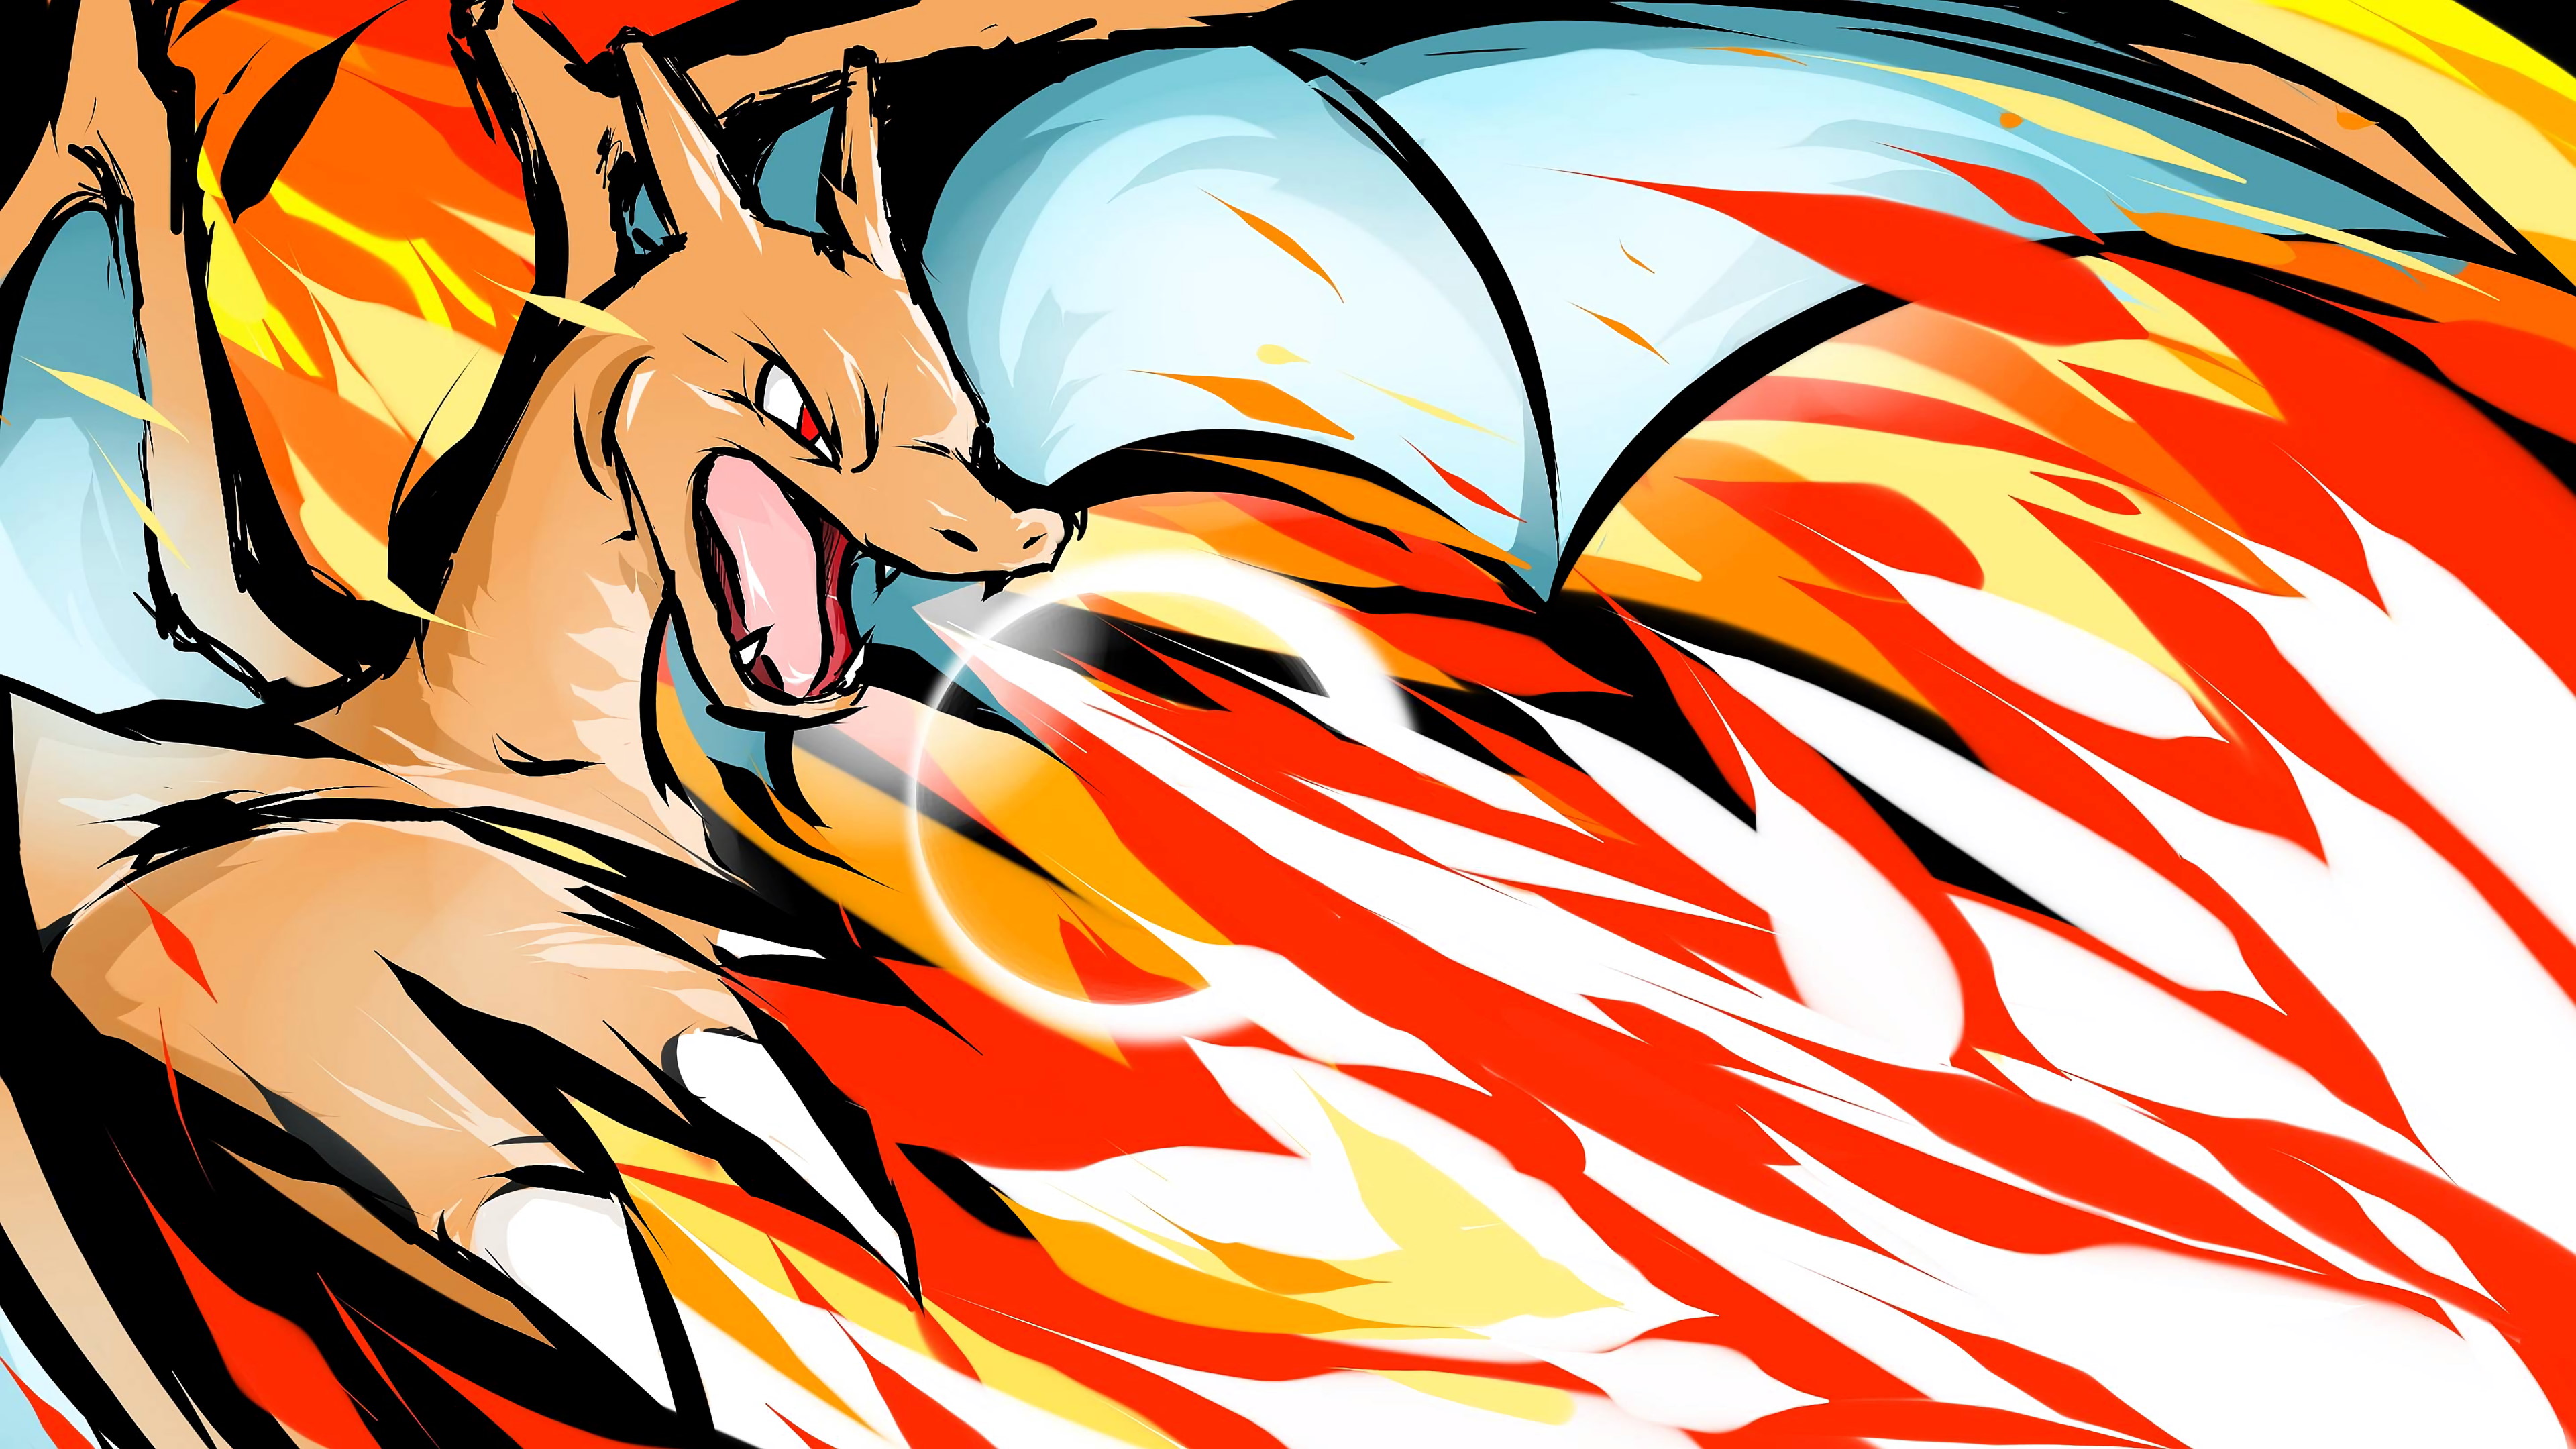 Pokémon Mega Fire Red Images - LaunchBox Games Database